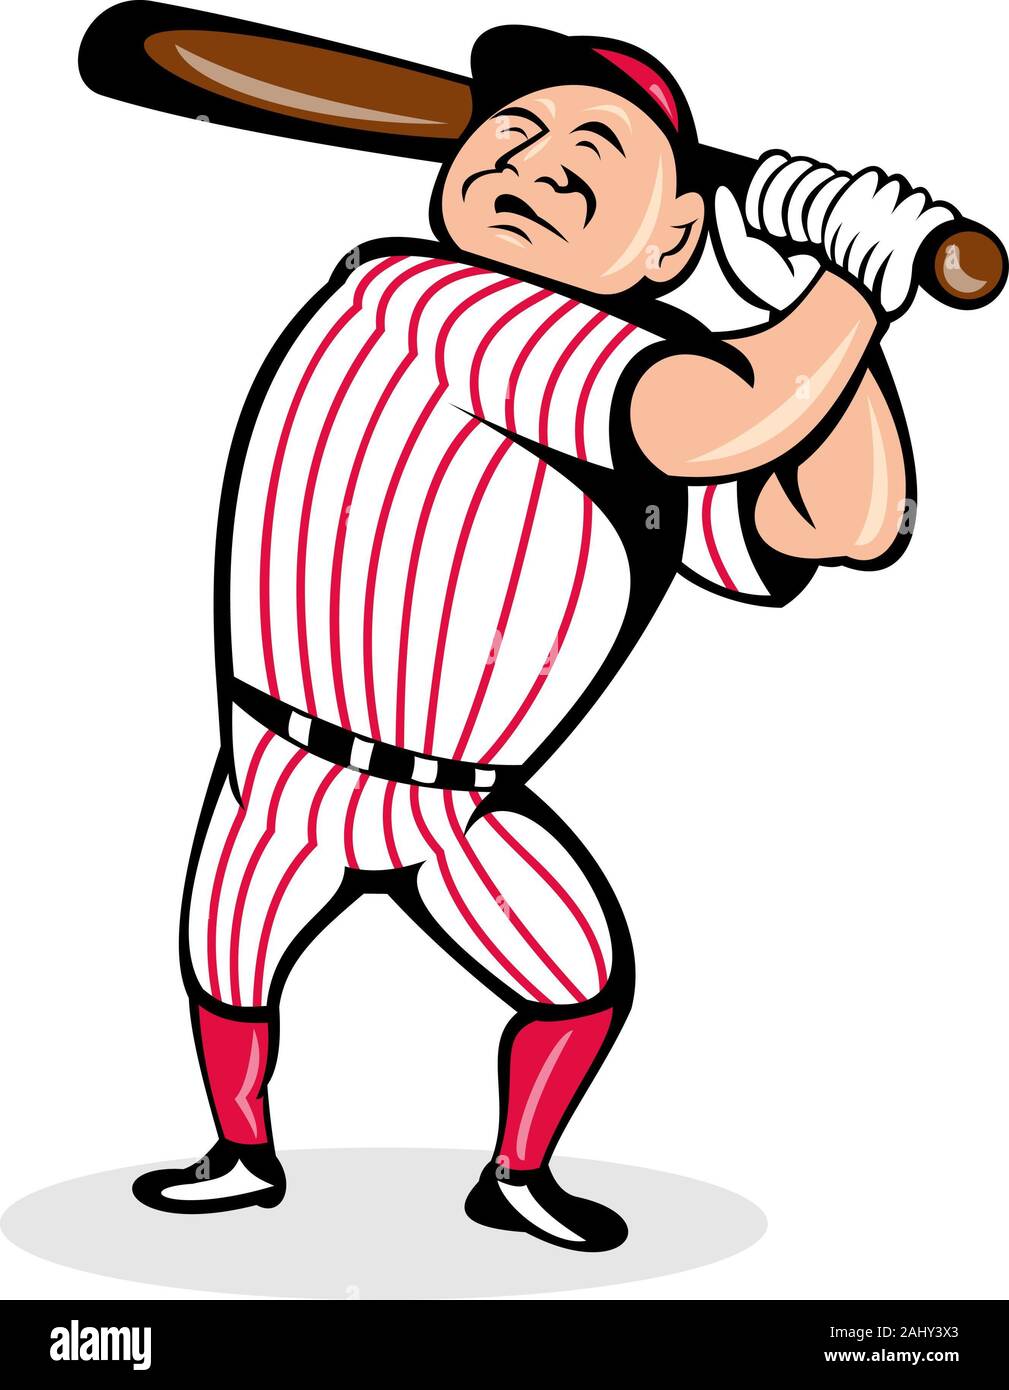 Cute Cartoon Baseball Player Stock Illustration - Download Image